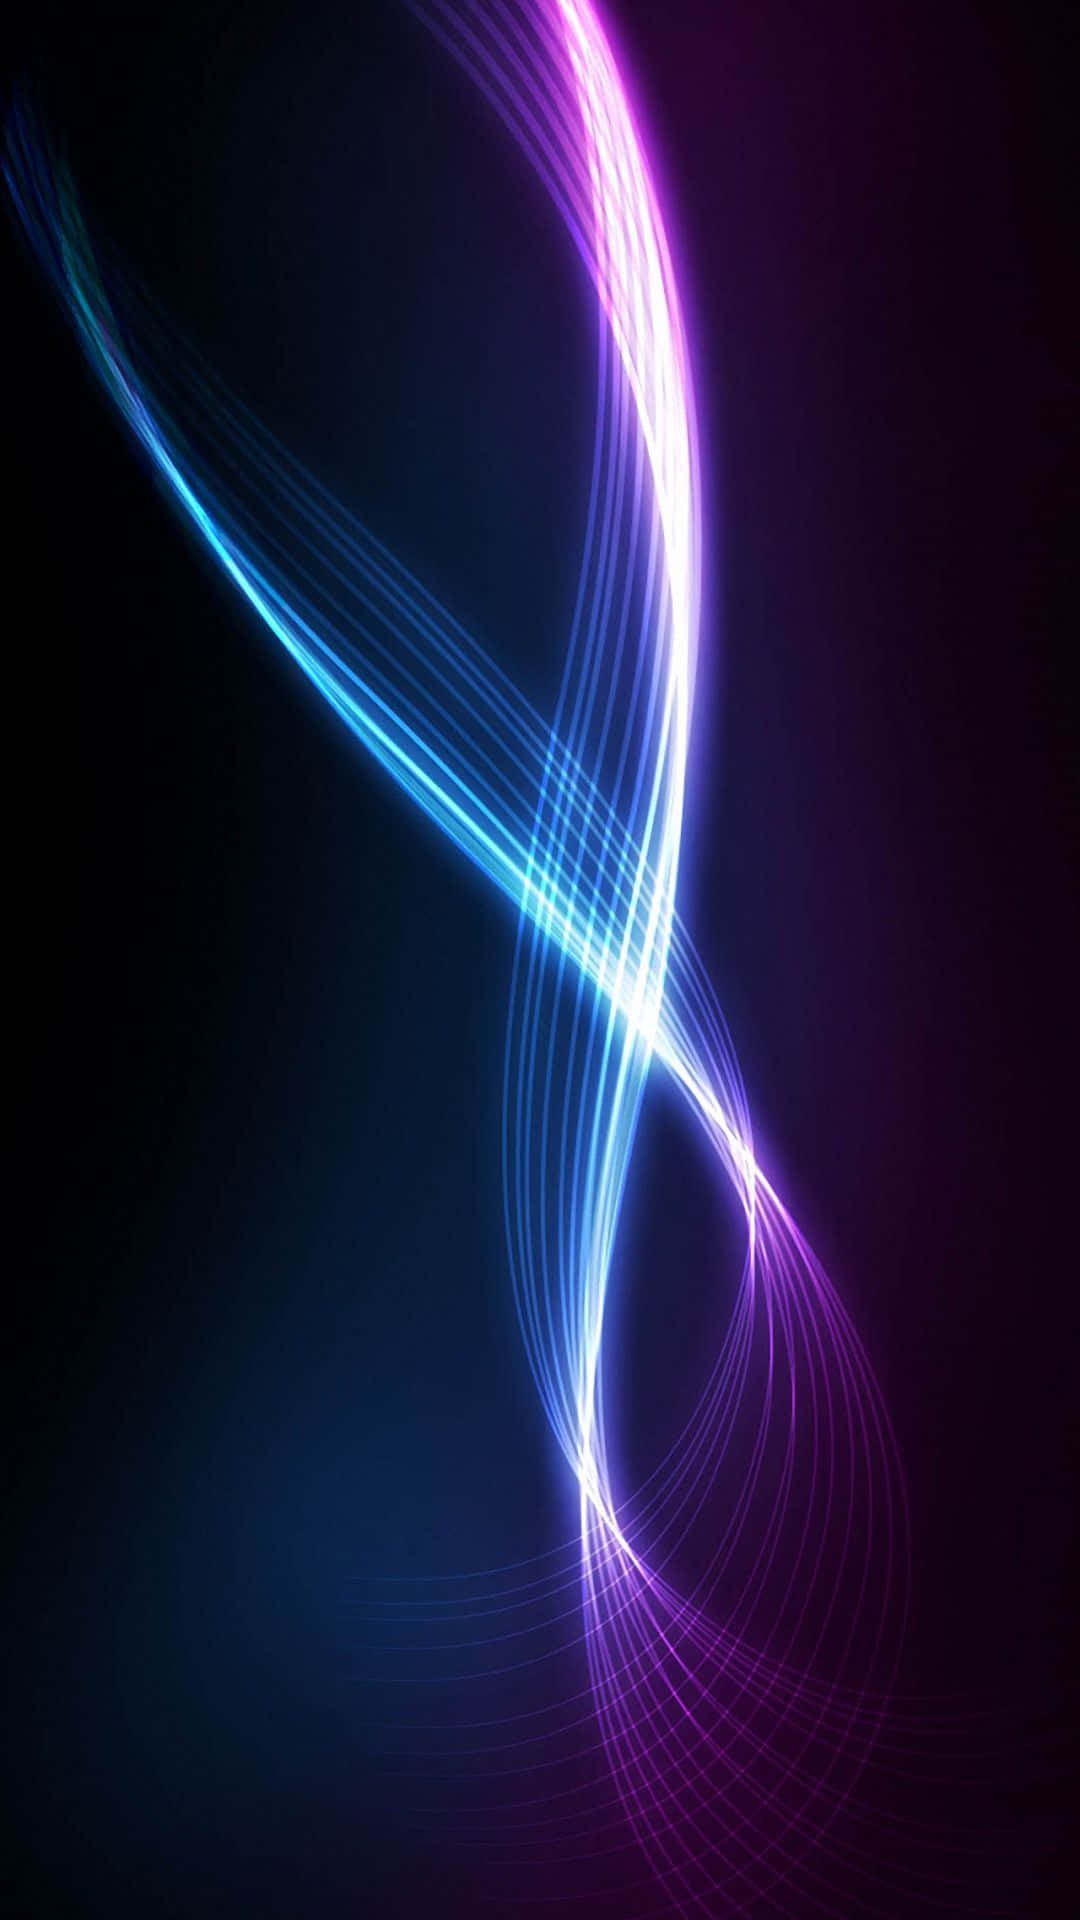 Samsung Galaxy S5 - Modern Design, Powerful Features Background